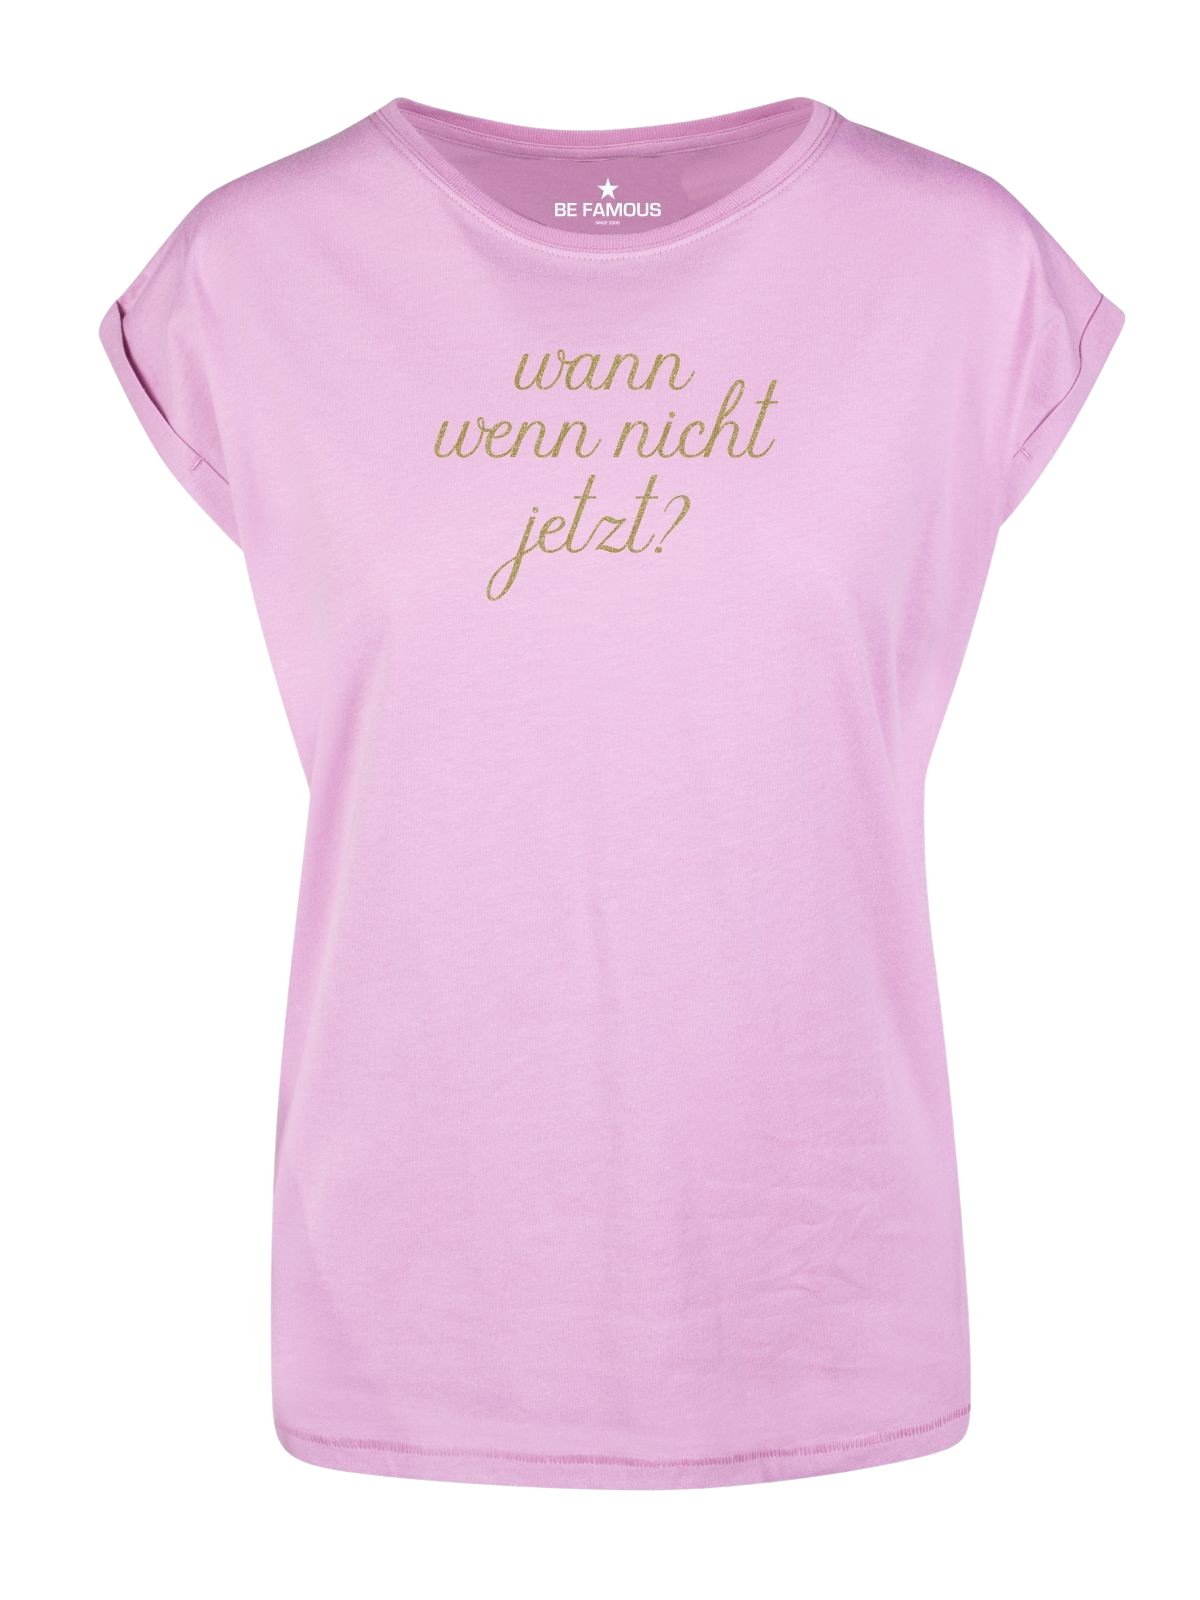 Be Famous Women Rolled T-Shirt WAWENIJE Shirt Cool Pink (Print: 14k Gold Glitter G0094) XXL